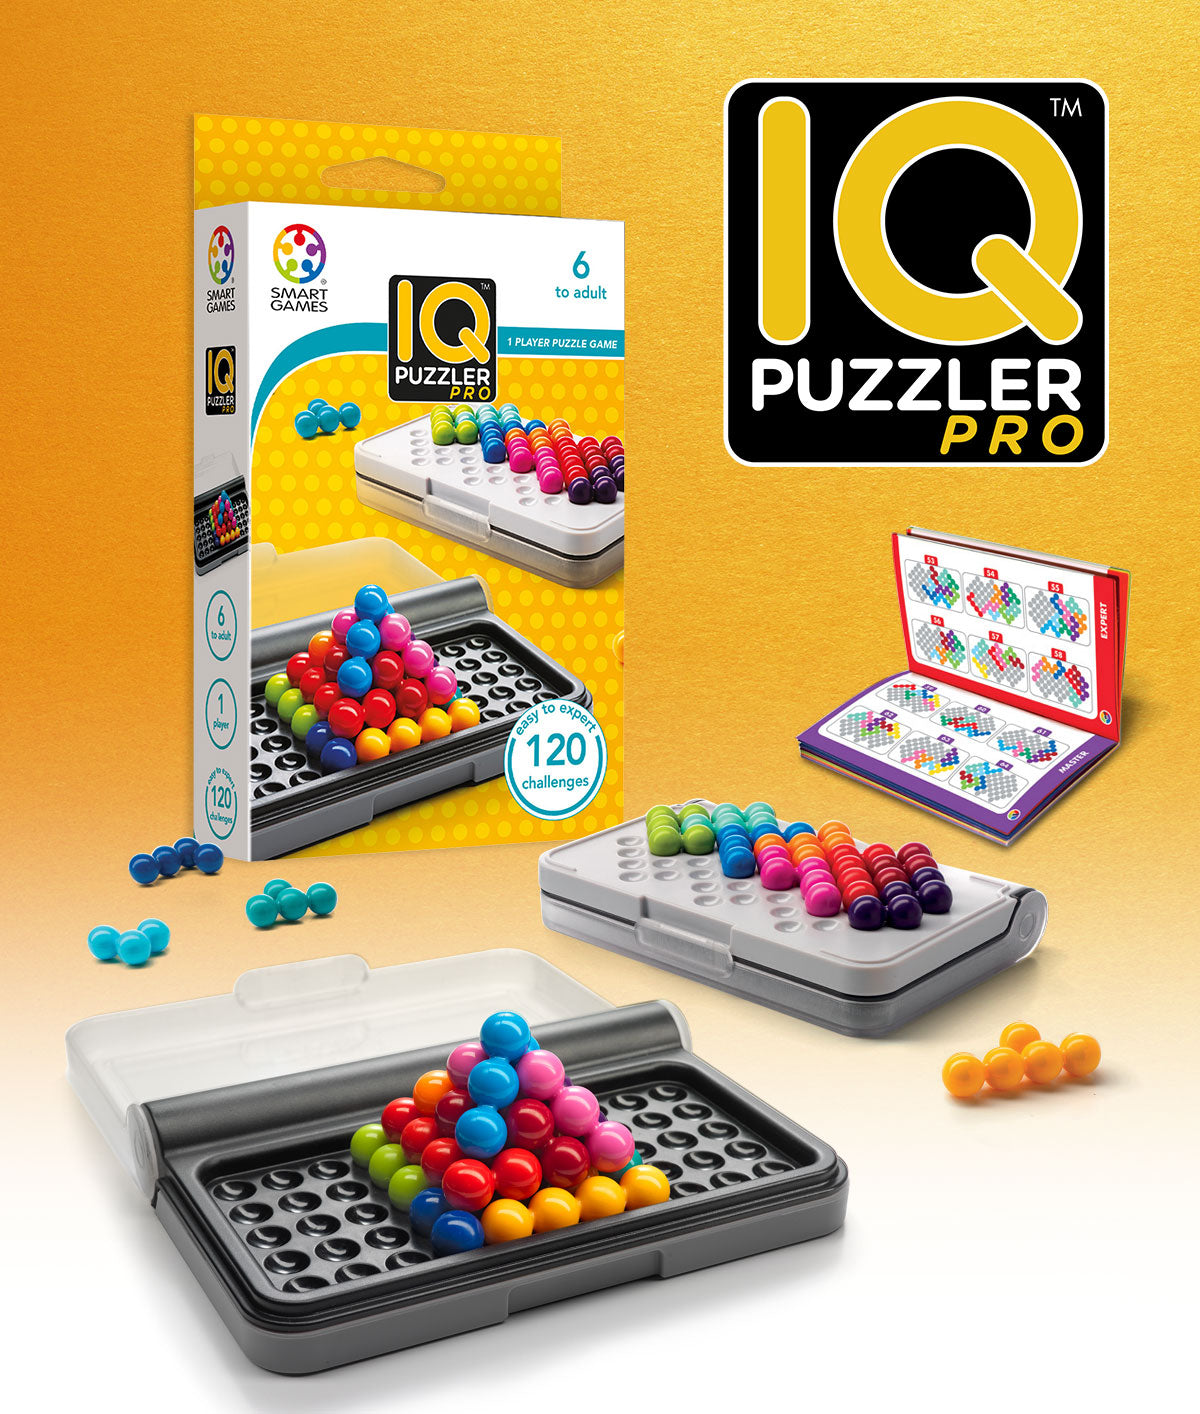 Smart Games IQ Puzzler Pro Puzzle Game